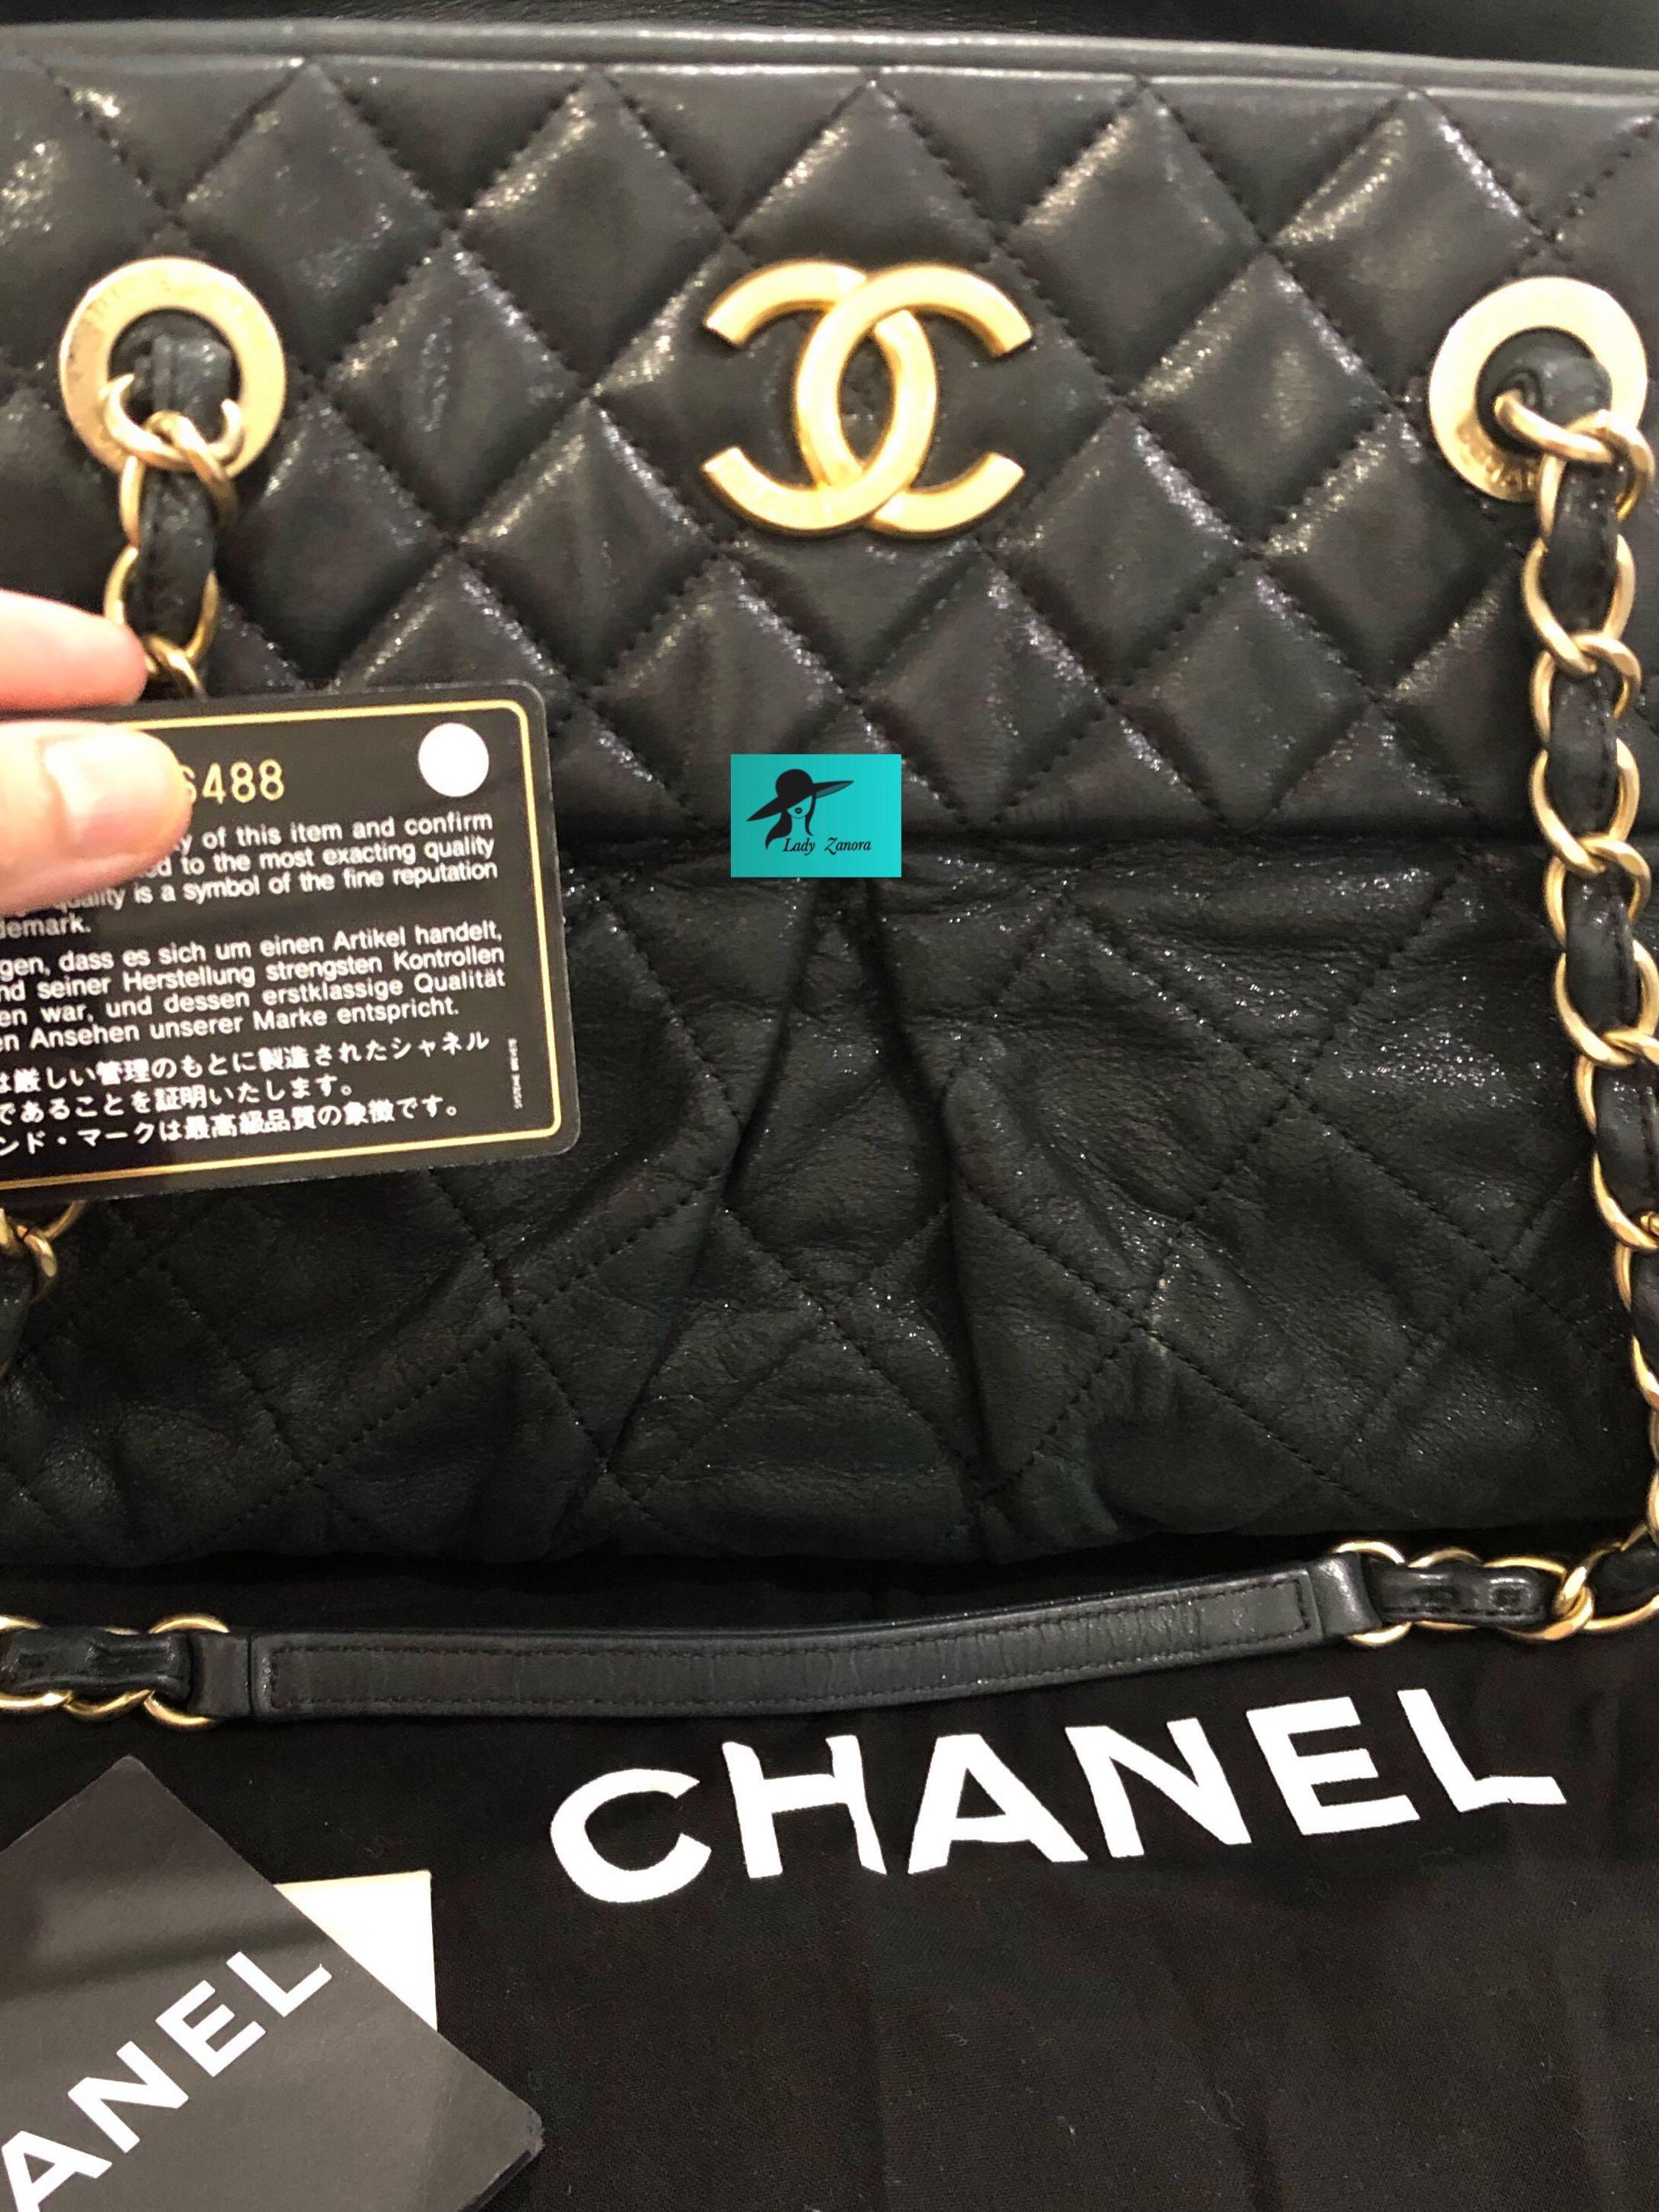 Chanel Chanel Mademoiselle Black Quilted Calfskin Leather Shoulder